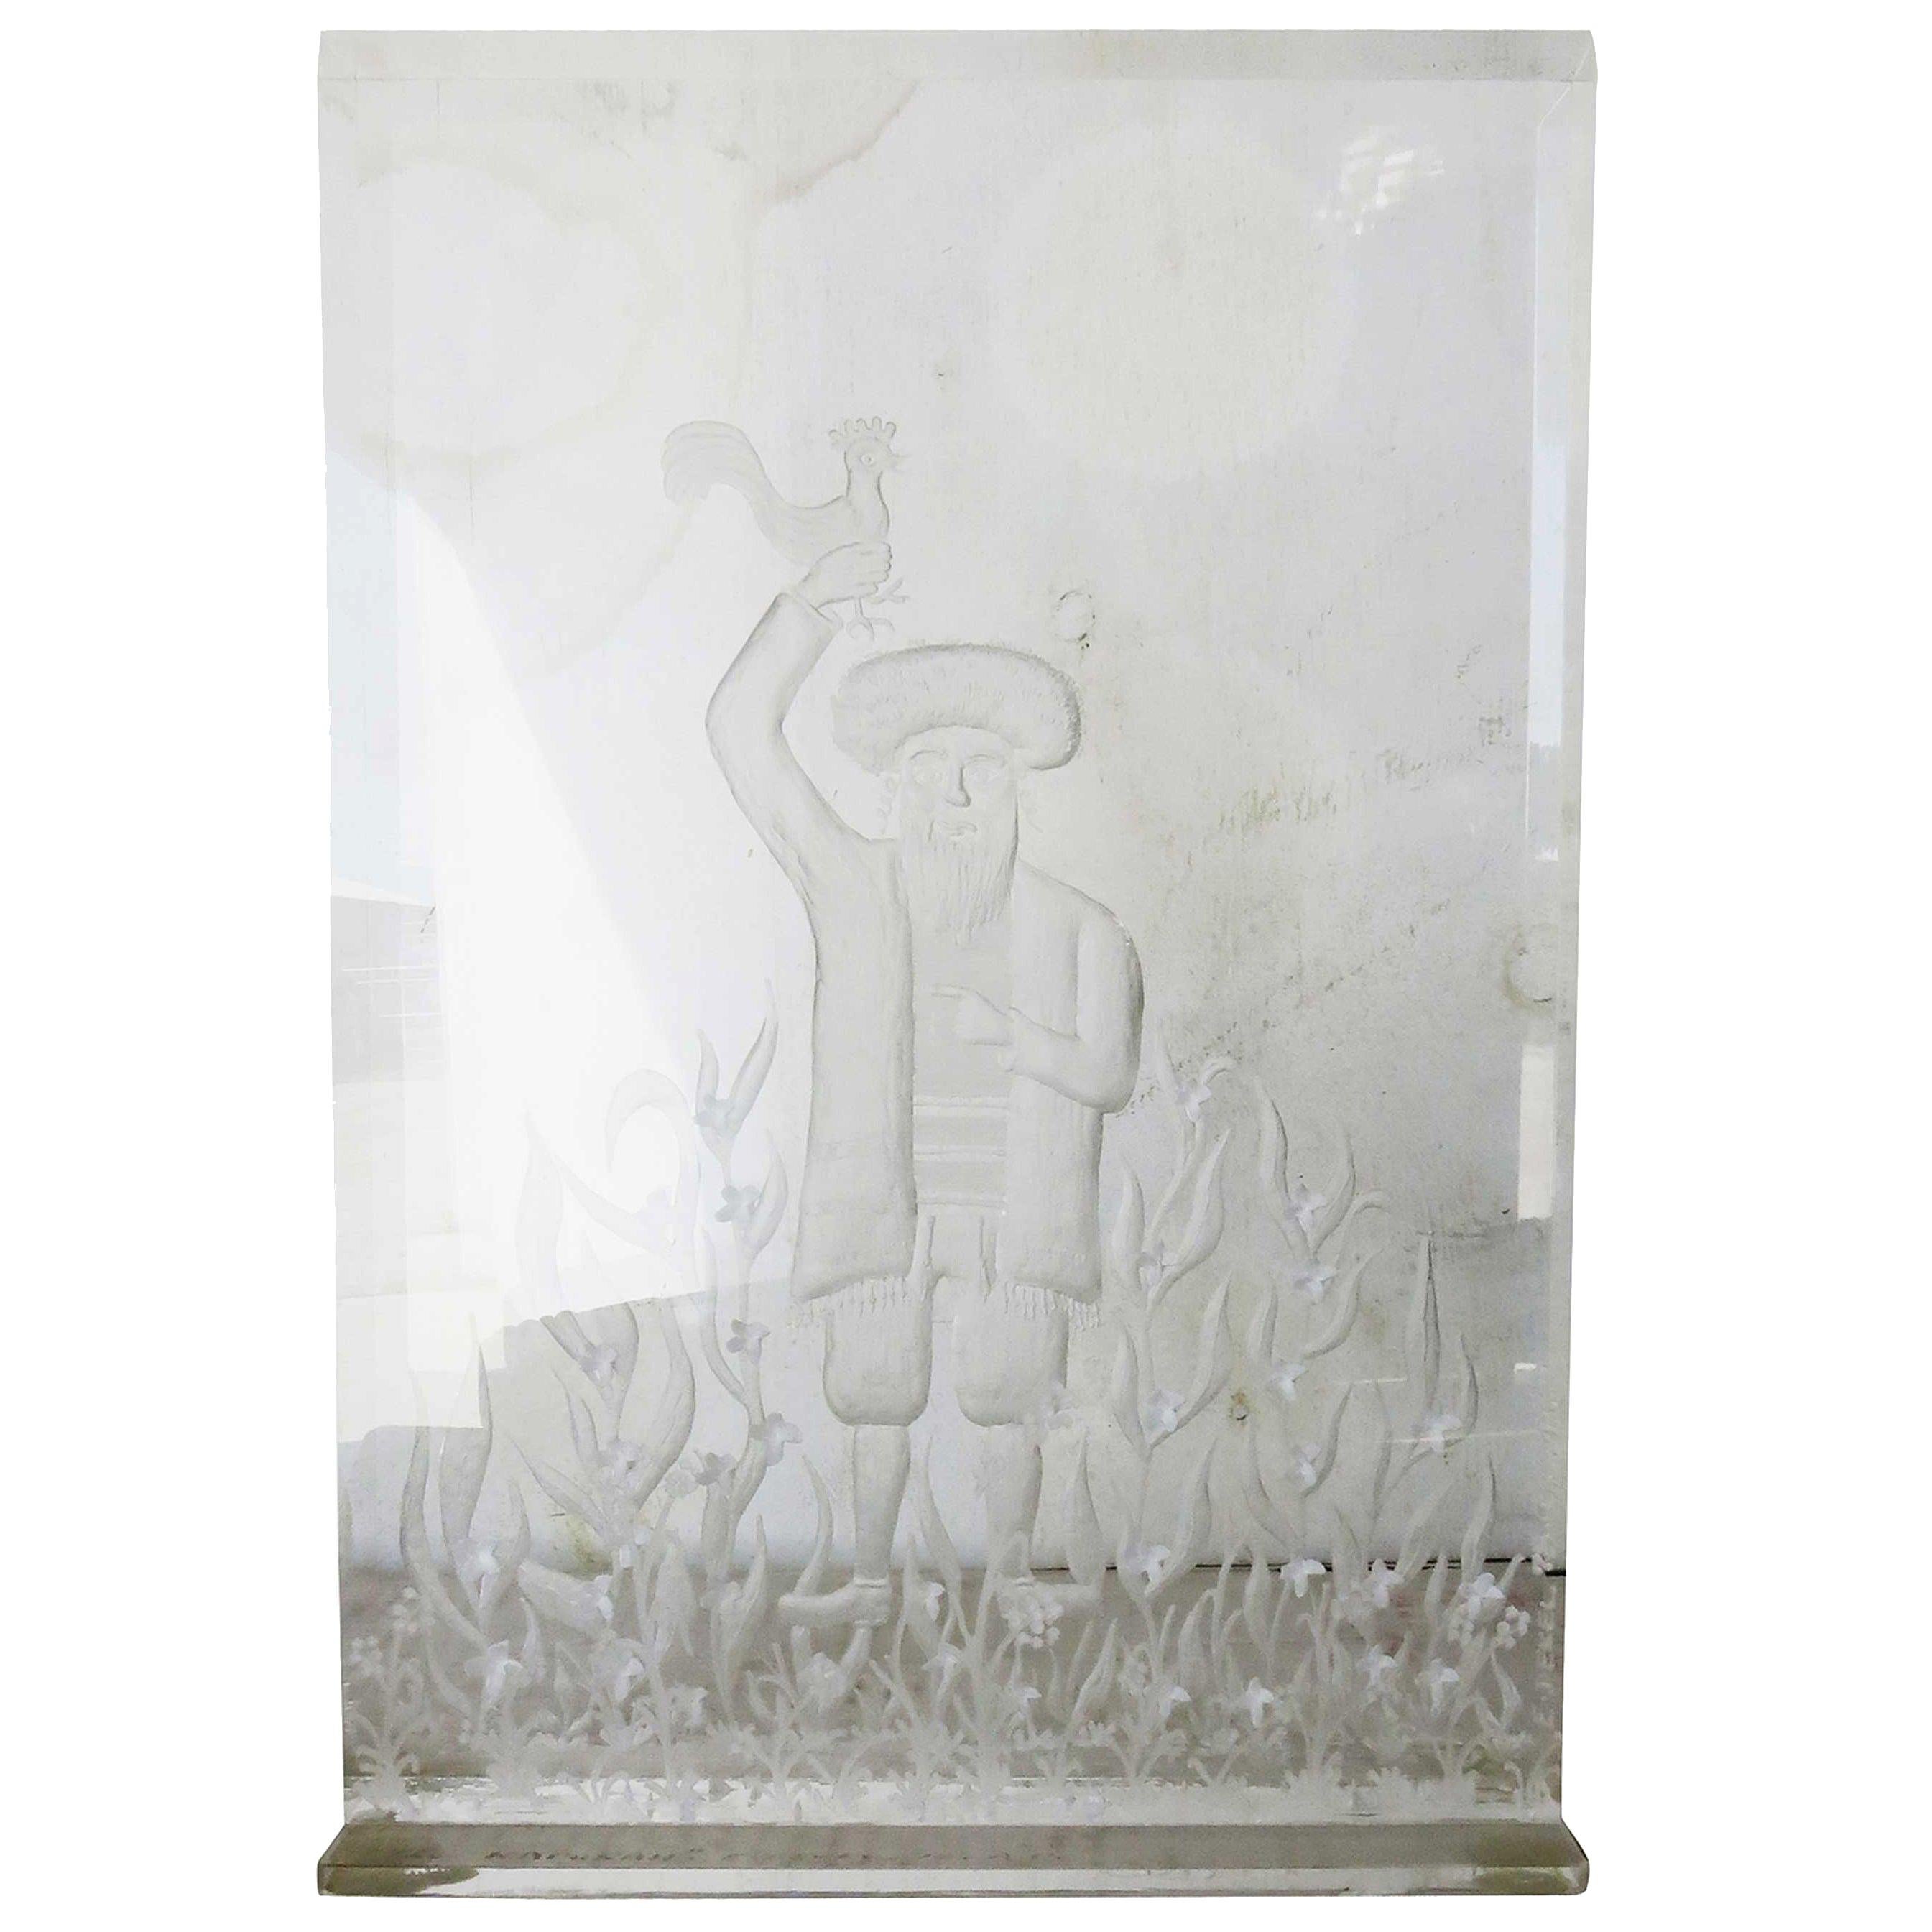 Three Dimensional "Yom Kippur" Etched Acrylic Block Art by Dekel For Sale